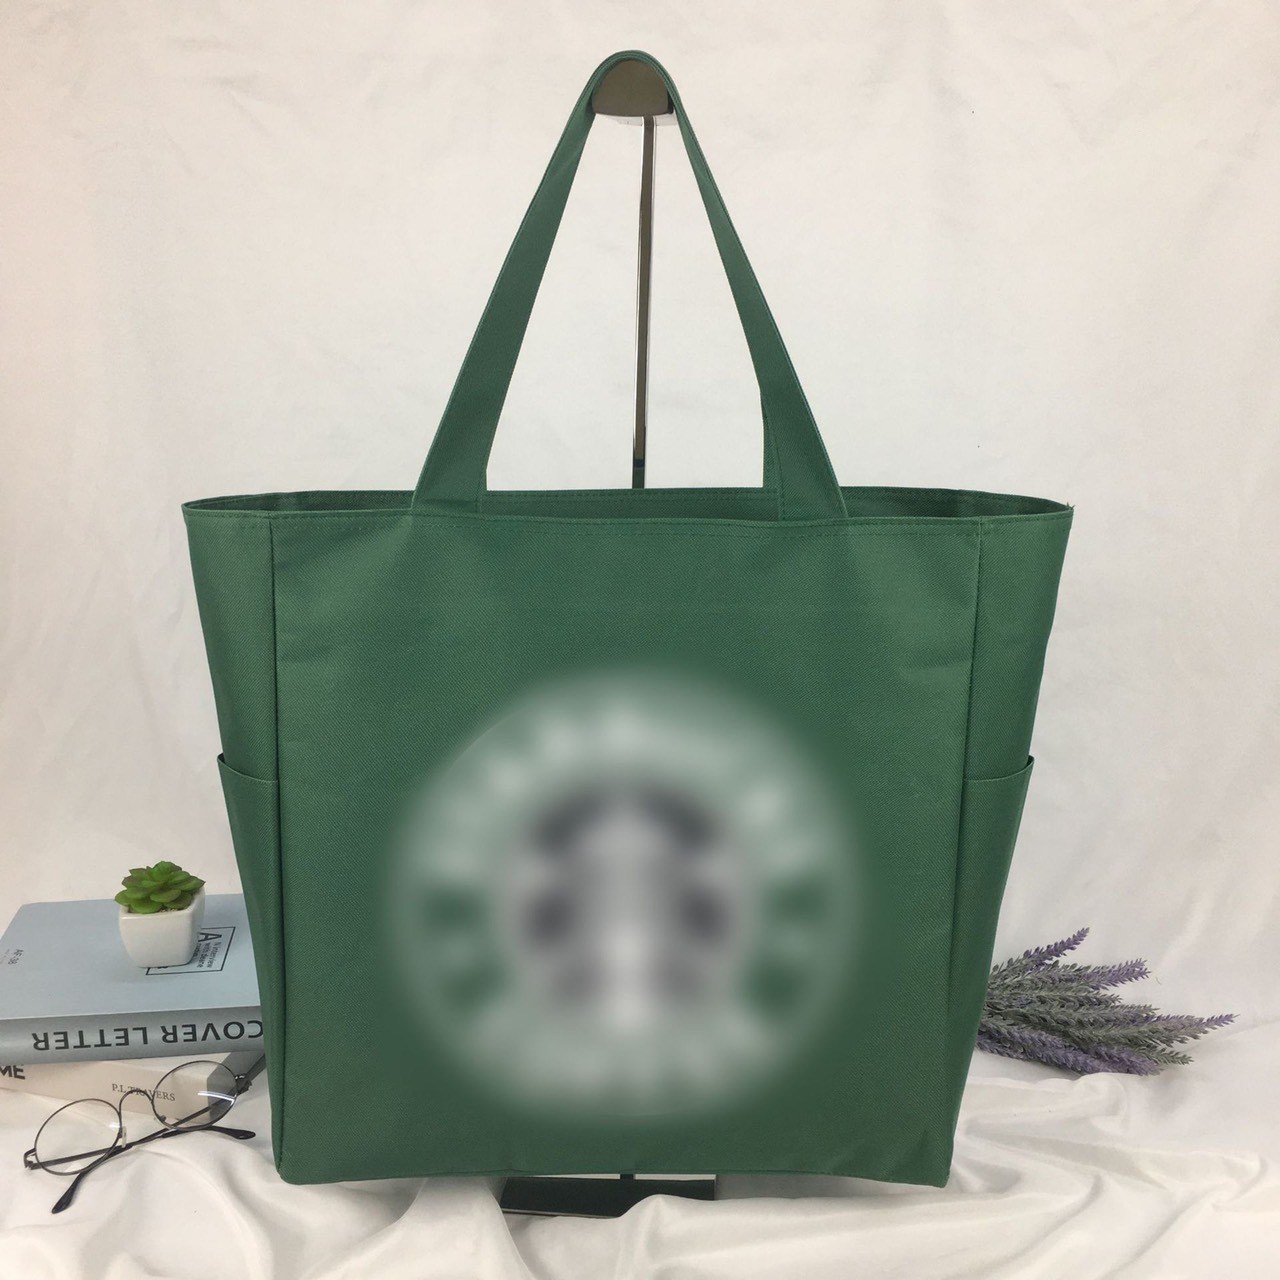 Starbucks สีเขียว กระเป๋าสะพายข้าง ถุงผ้าน่ารัก ถุงผ้าใส่ของ ถุงผ้าช็อปปิ้ง ถุงผ้ากันน้ำ ถุงผ้าแฟชั่น ถุงผ้ามีซิป  กระเป๋าถือ